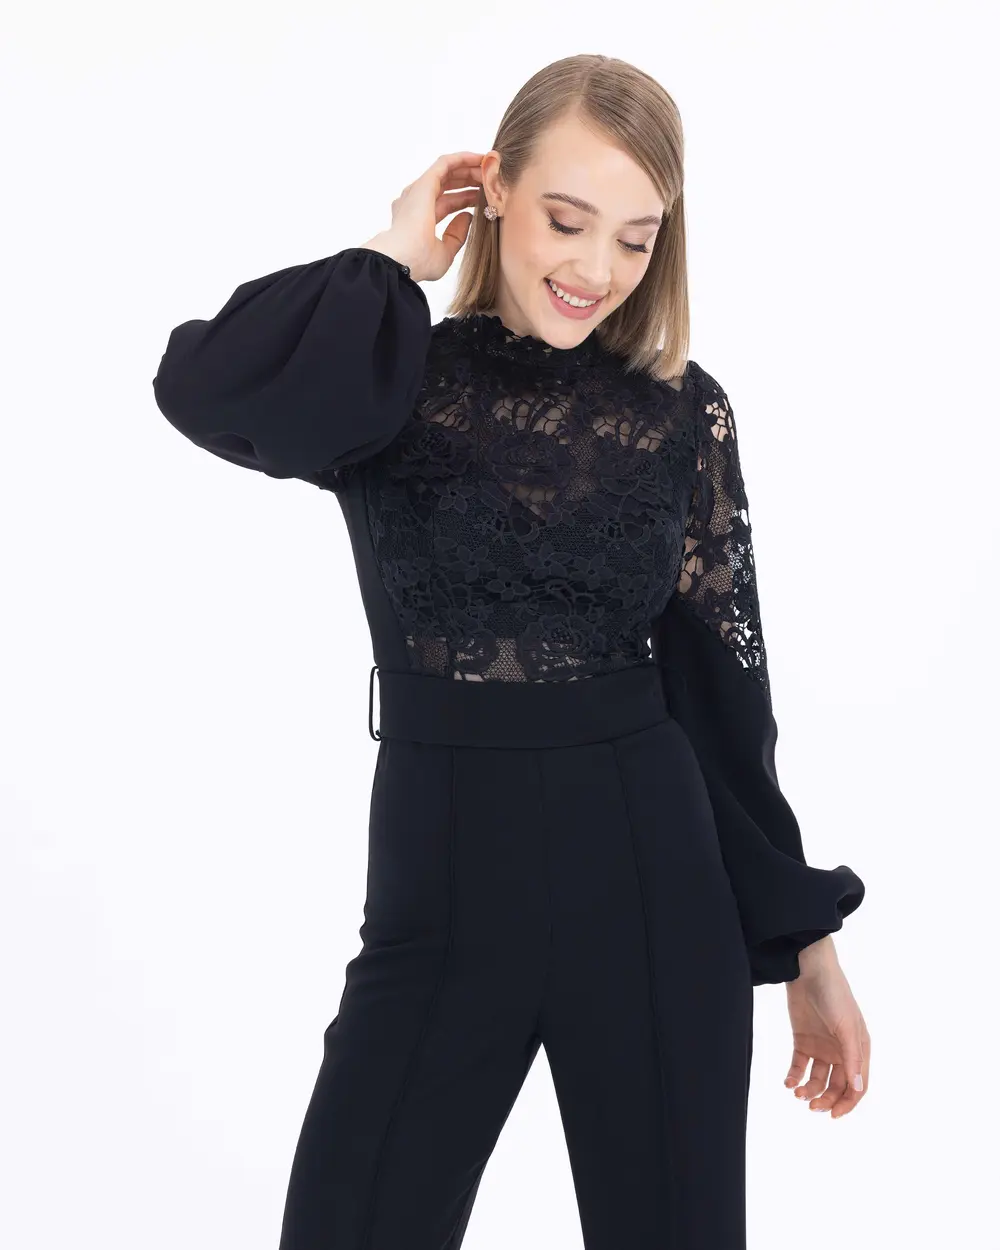 Lace Detailed Long Sleeve Crepe Evening Dress Jumpsuit